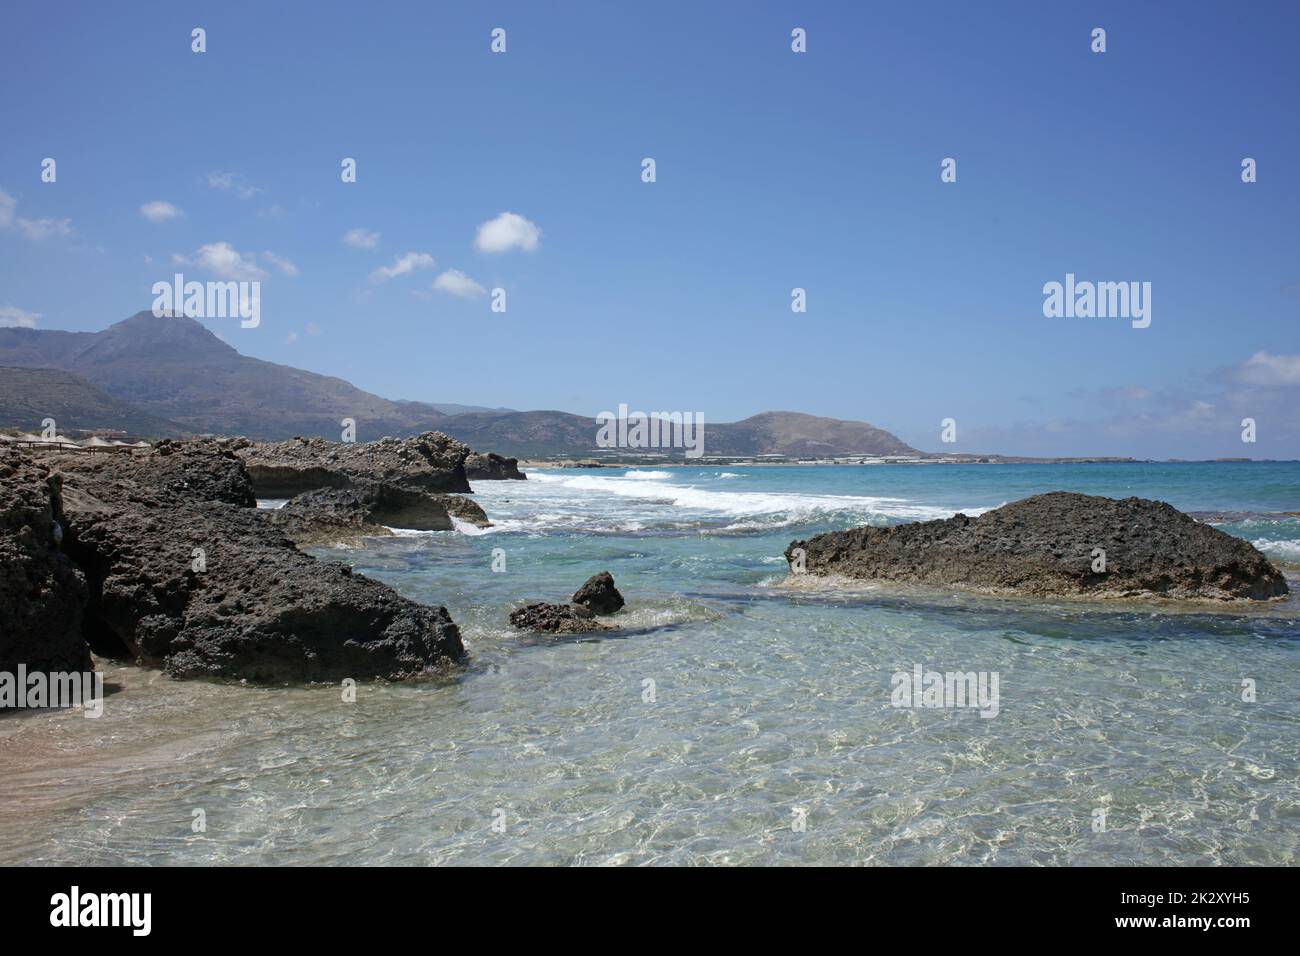 Falassarna Strand blaue Lagune kreta Insel Sommer 2020 covid-19 Urlaub Moderne hochwertige Drucke Stockfoto